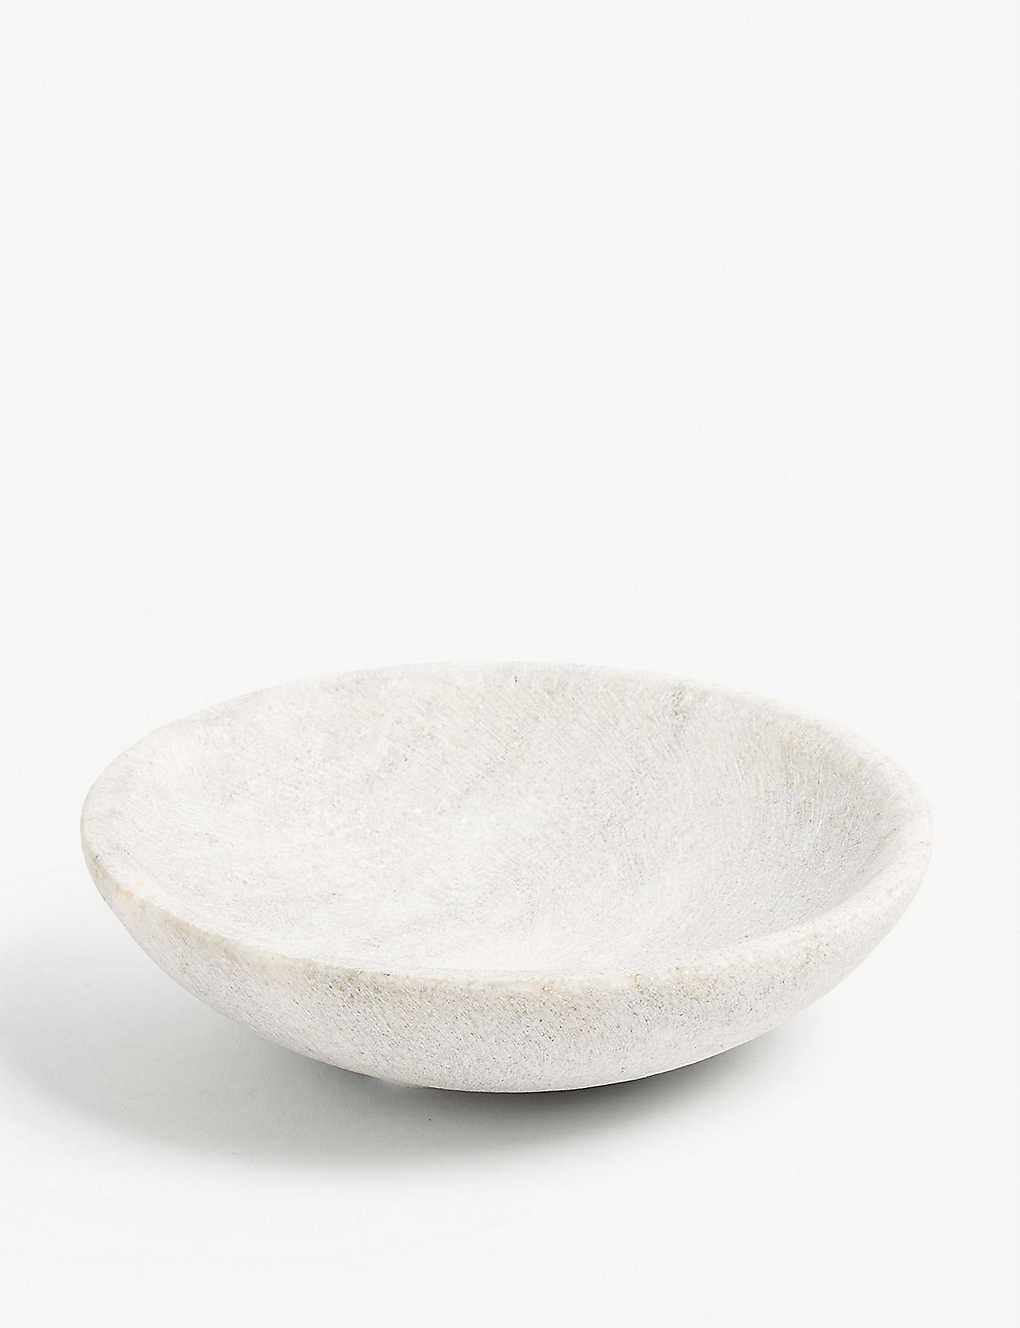 THE WHITE COMPANY マーブル ソープ ディッシュ 15.5cm Marble soap dish 15.5cm #WHITE 1